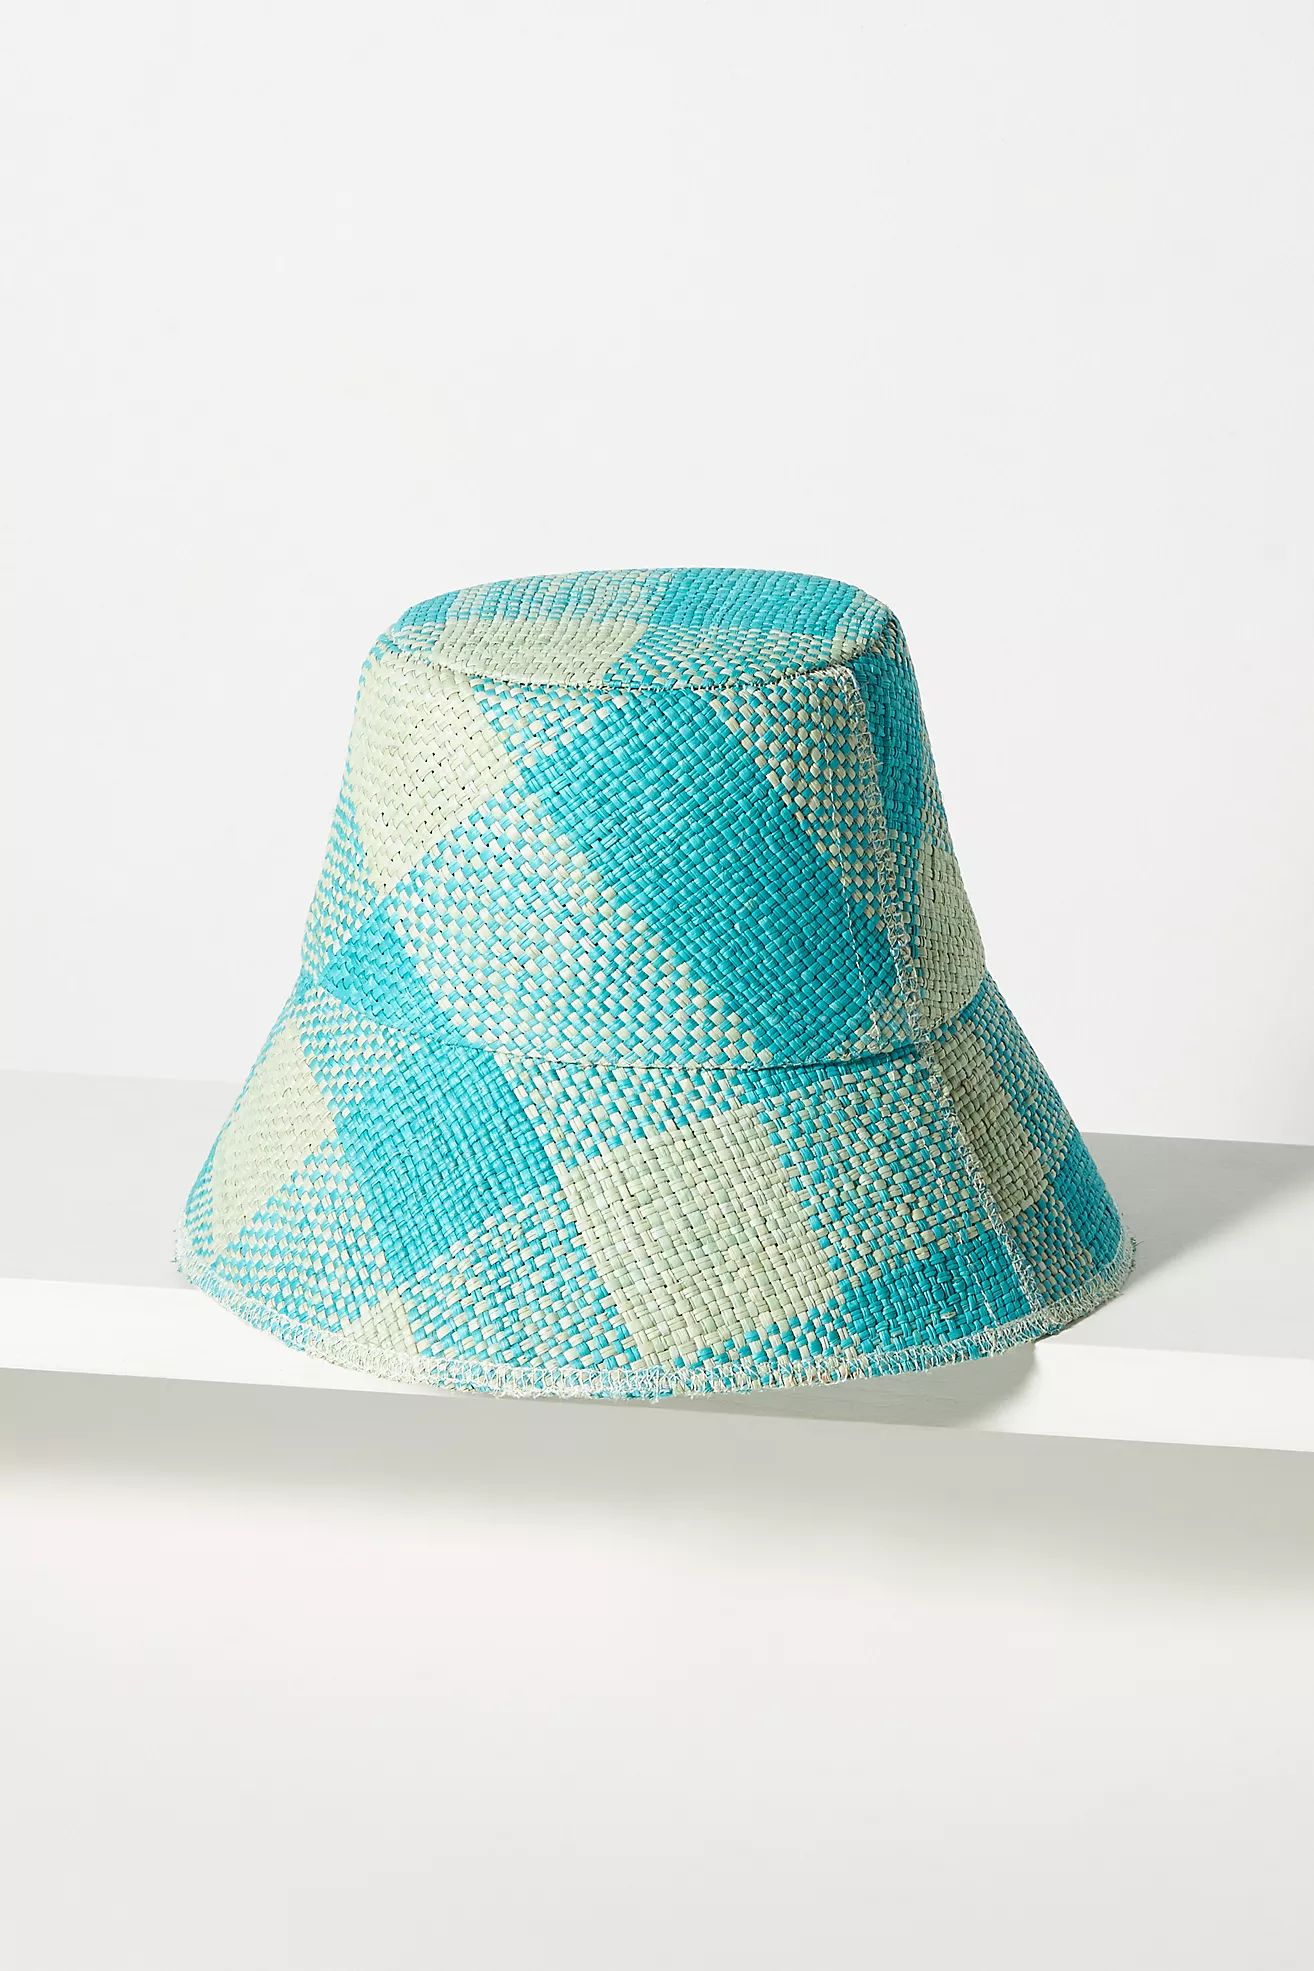 Artesano Plaid Bucket Hat | Anthropologie (US)